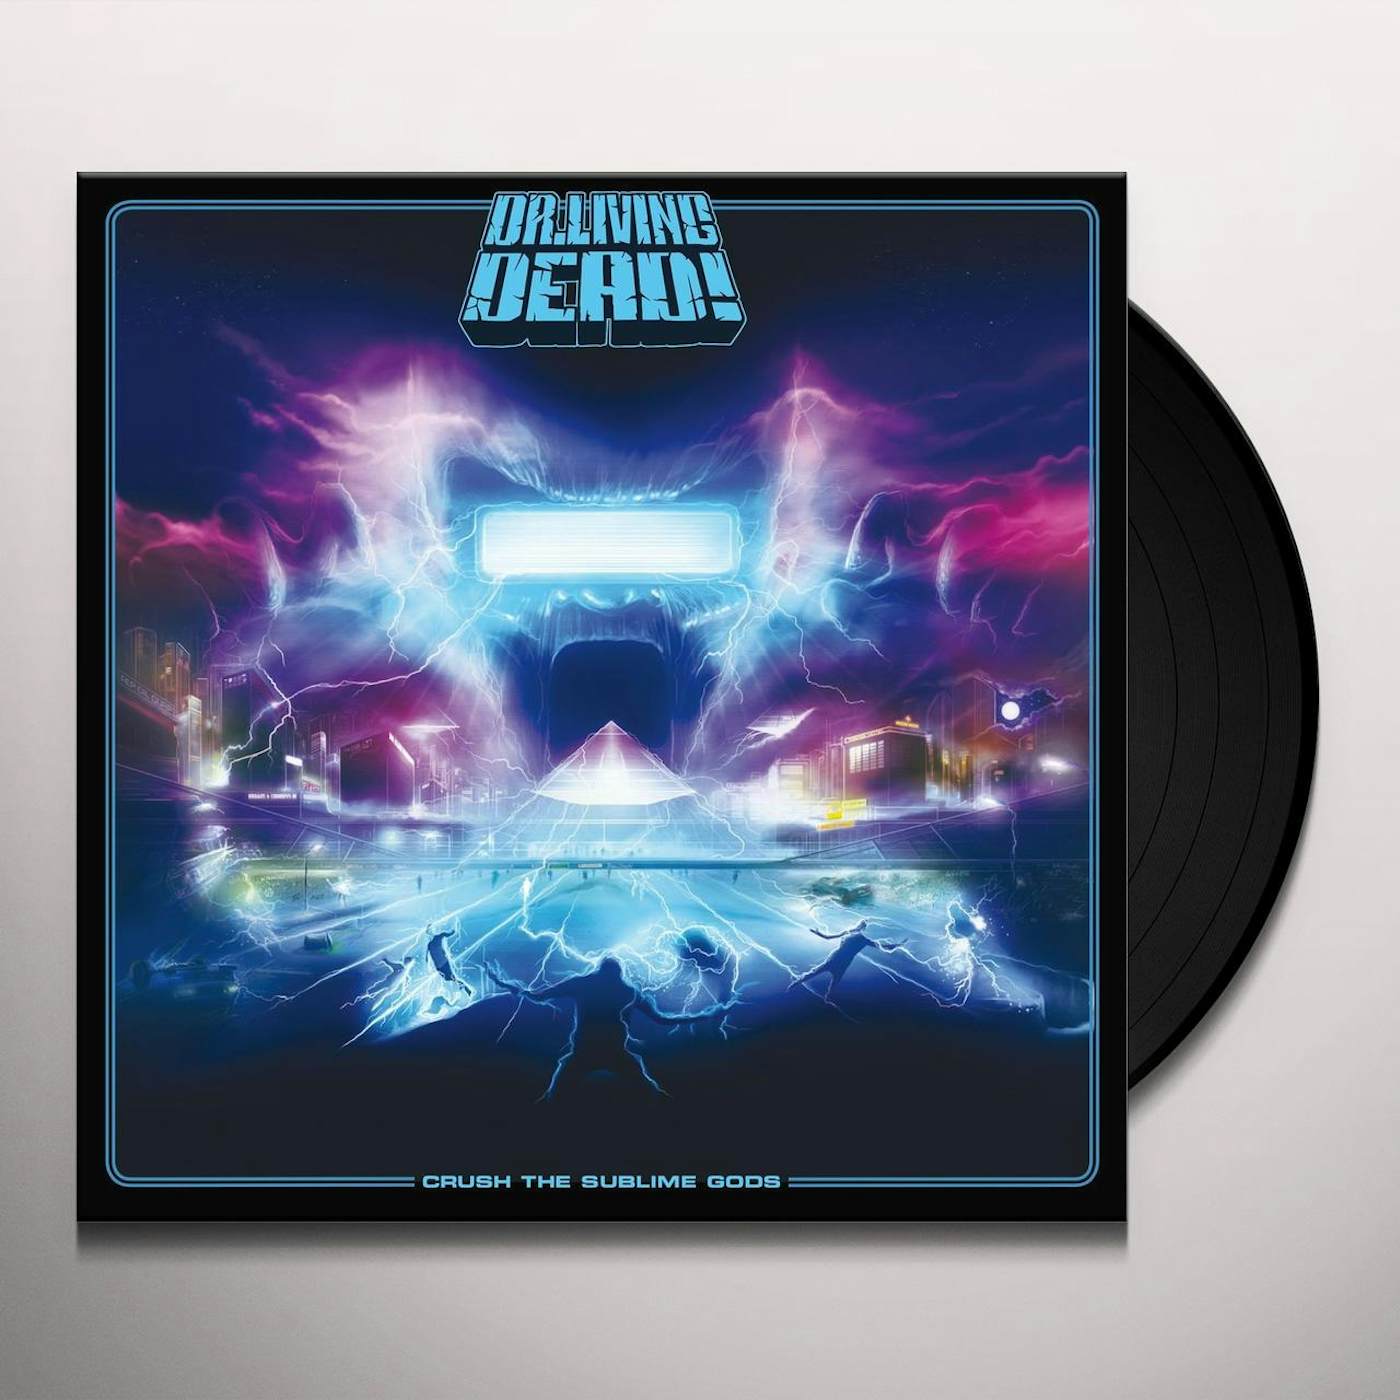 Dr. Living Dead Crush the Sublime Gods Vinyl Record